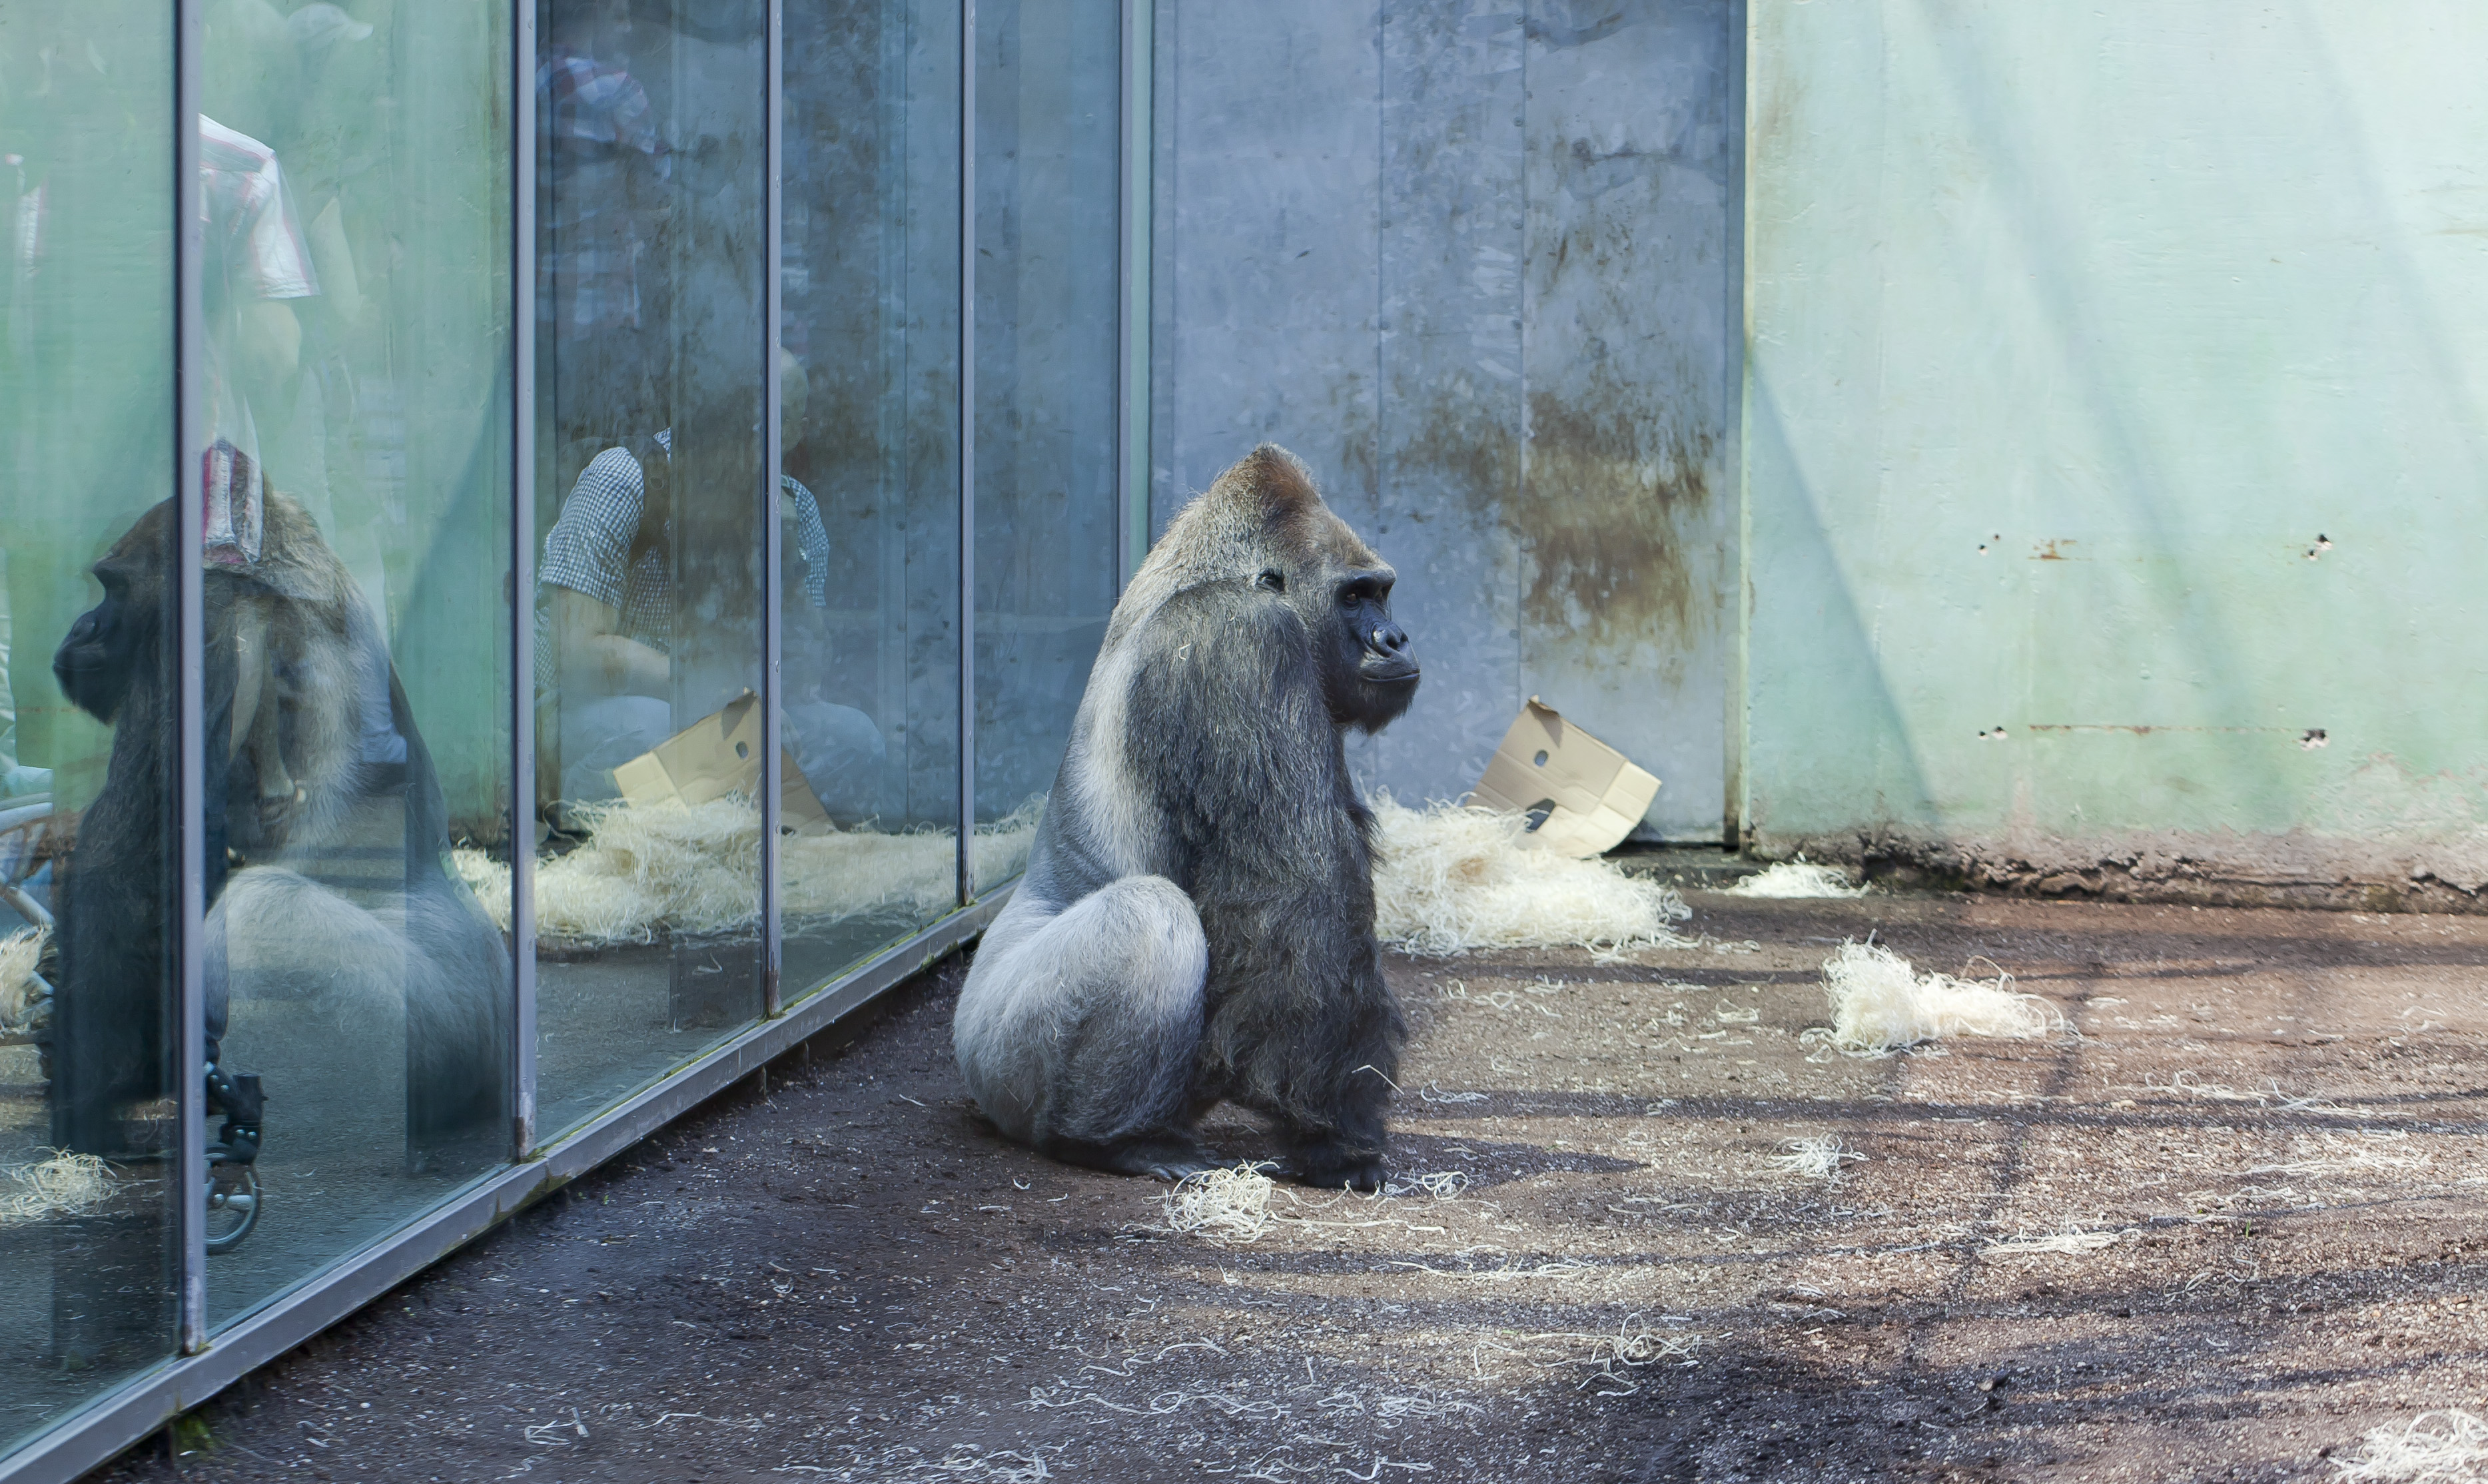 Gorila occidental (Gorilla gorilla), Tierpark Hellabrunn, Múnich, Alemania, 2012-06-17, DD 01